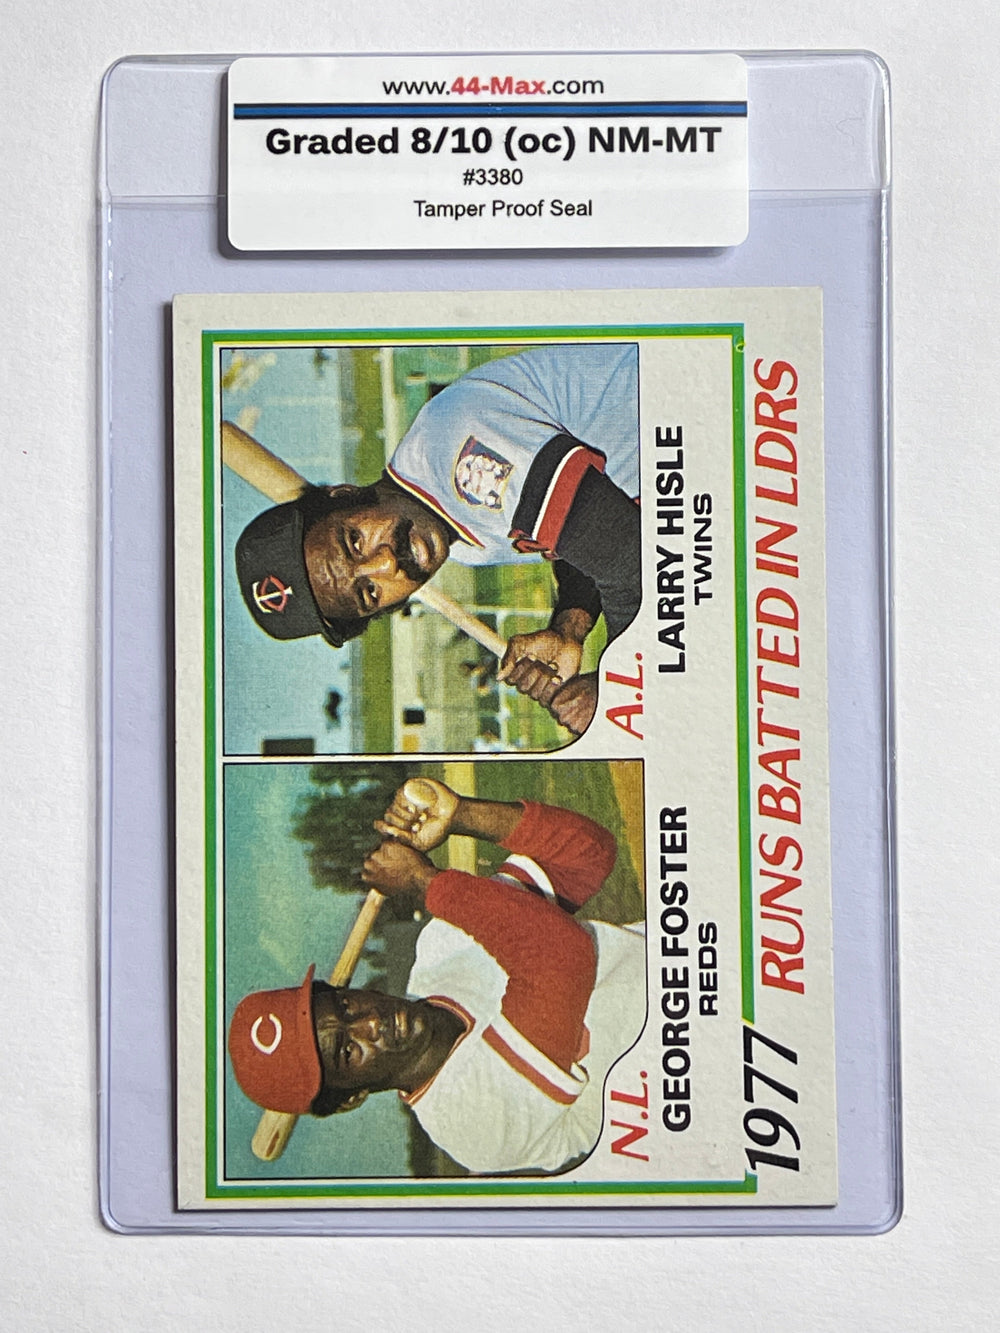 George Foster 1978 O-Pee-Chee Baseball Card. 44-Max 8/10 (oc) NM-MT #3380